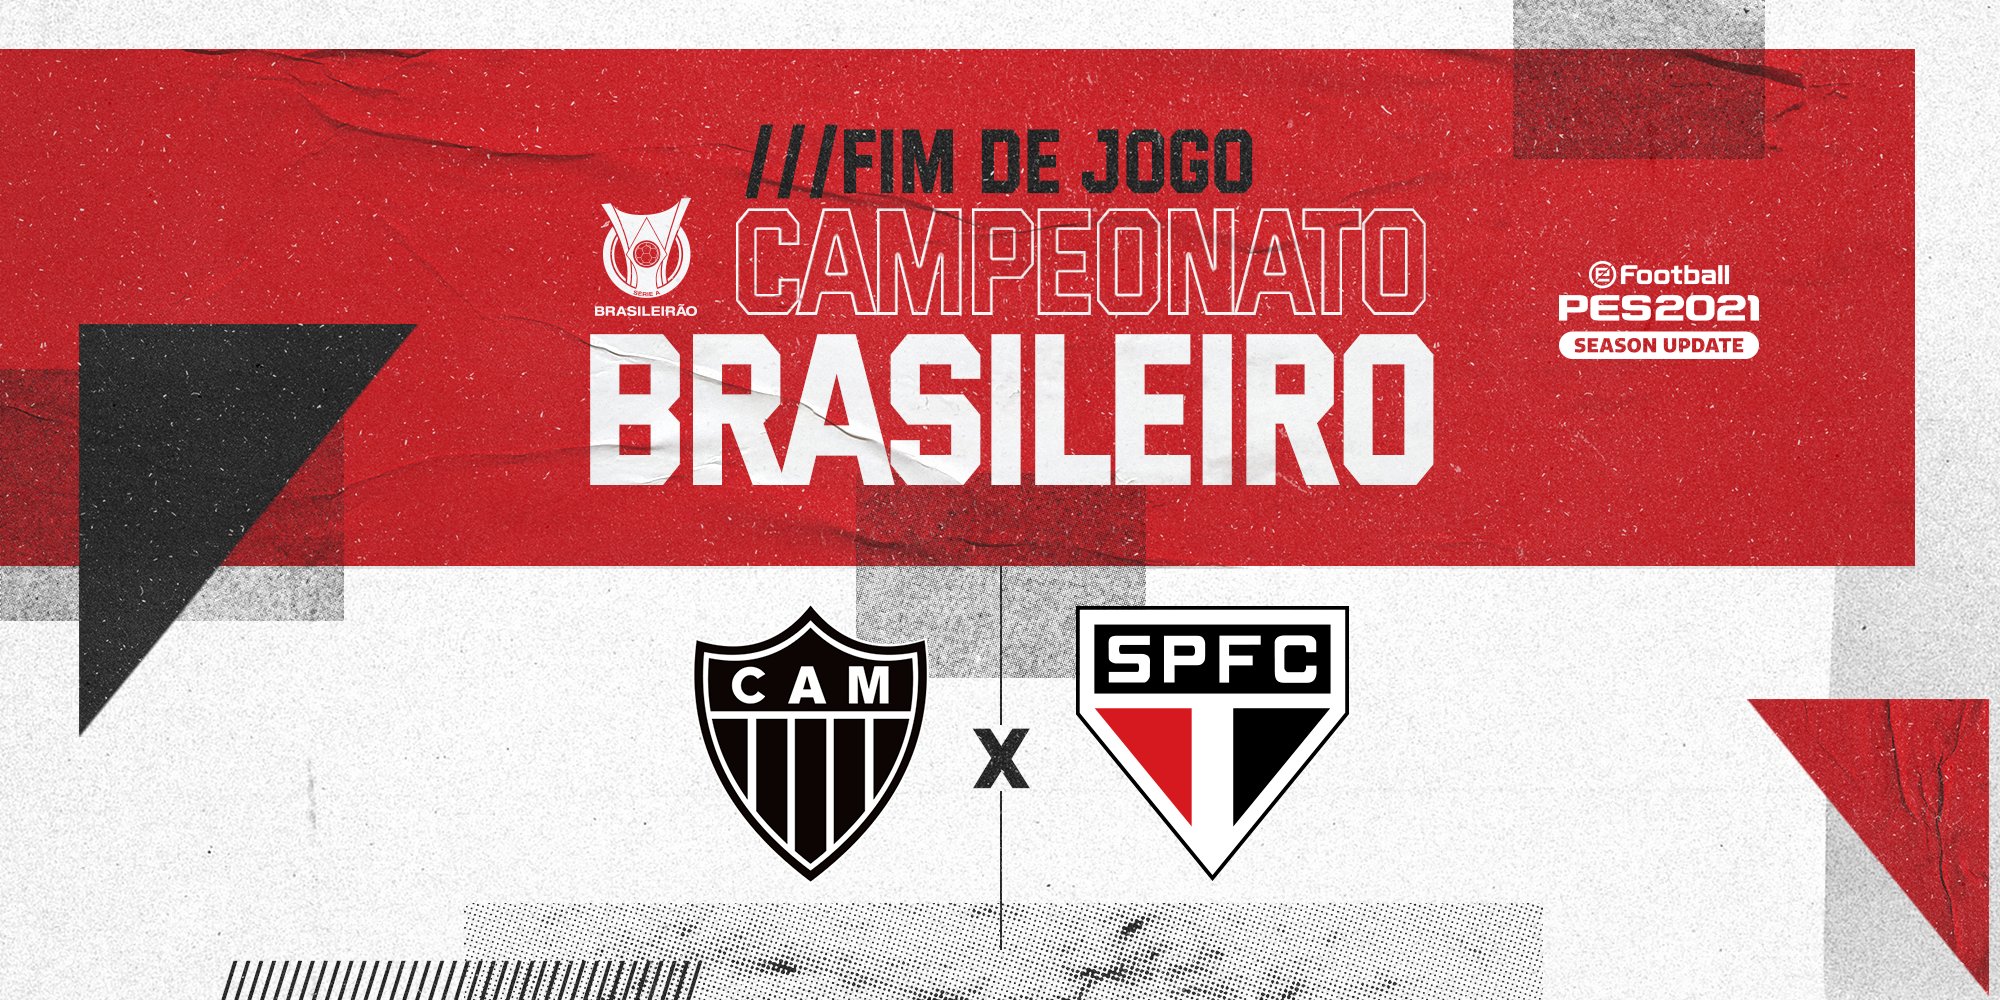 São Paulo FC on X: Fim de jogo! #SPFCxSAN (3-1) ⚽ Calleri ⚽ Galoppo ⚽ Luan  #VamosSãoPaulo 🇾🇪  / X